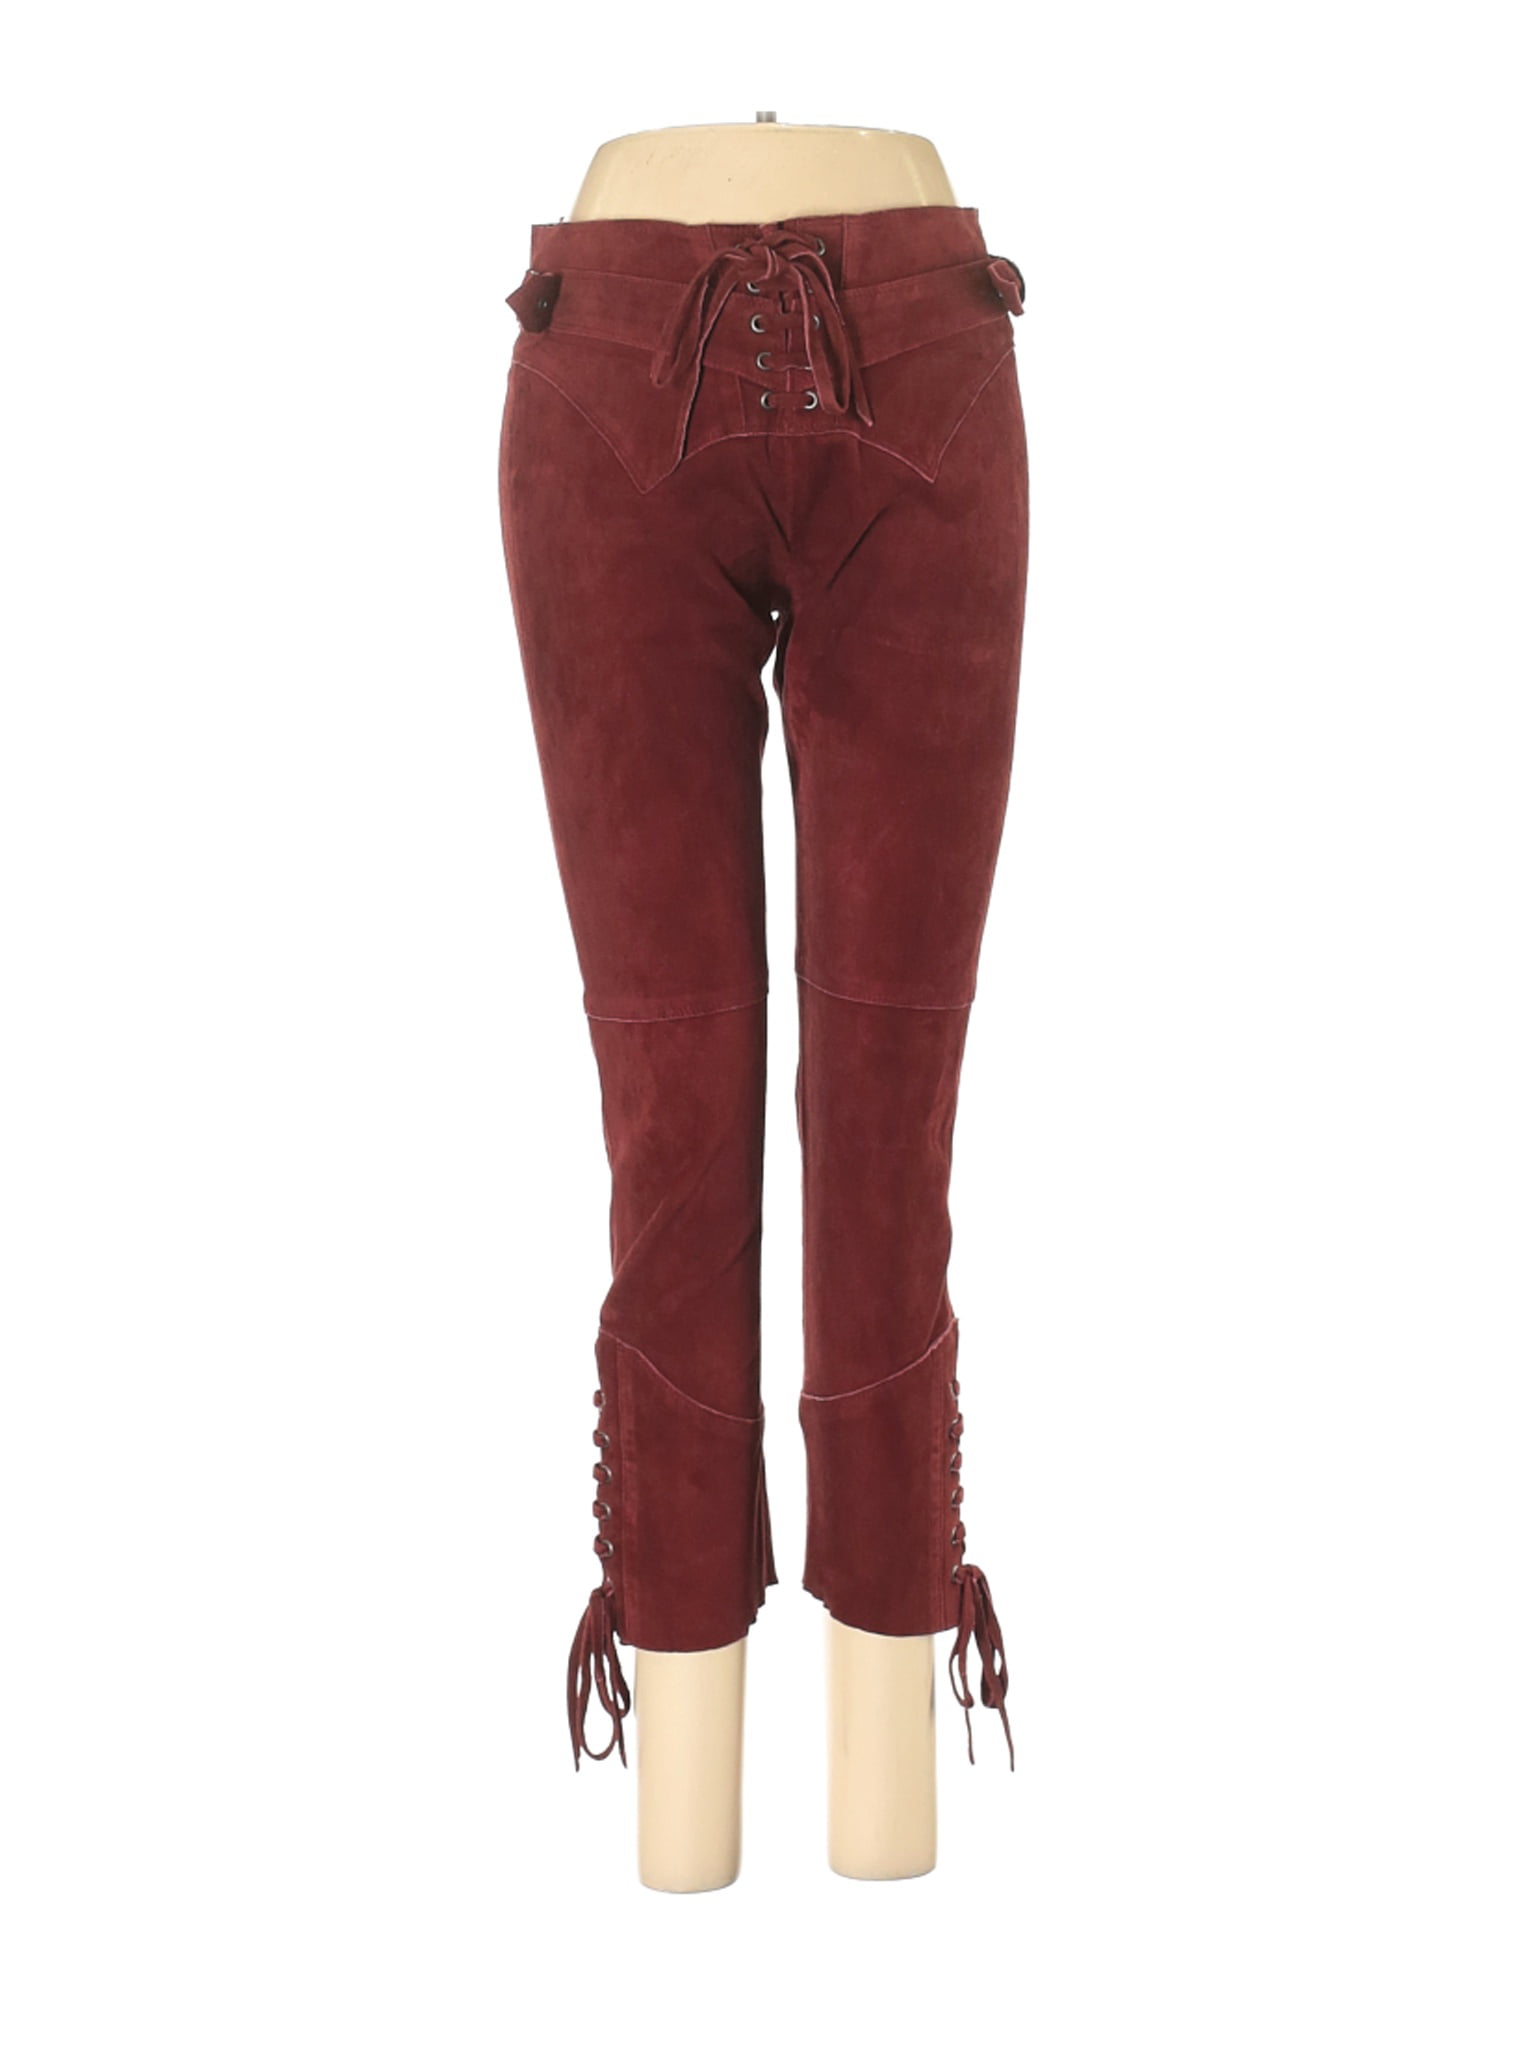 Pre-Owned Marant Women's Size 40 Leather Pants - Walmart.com